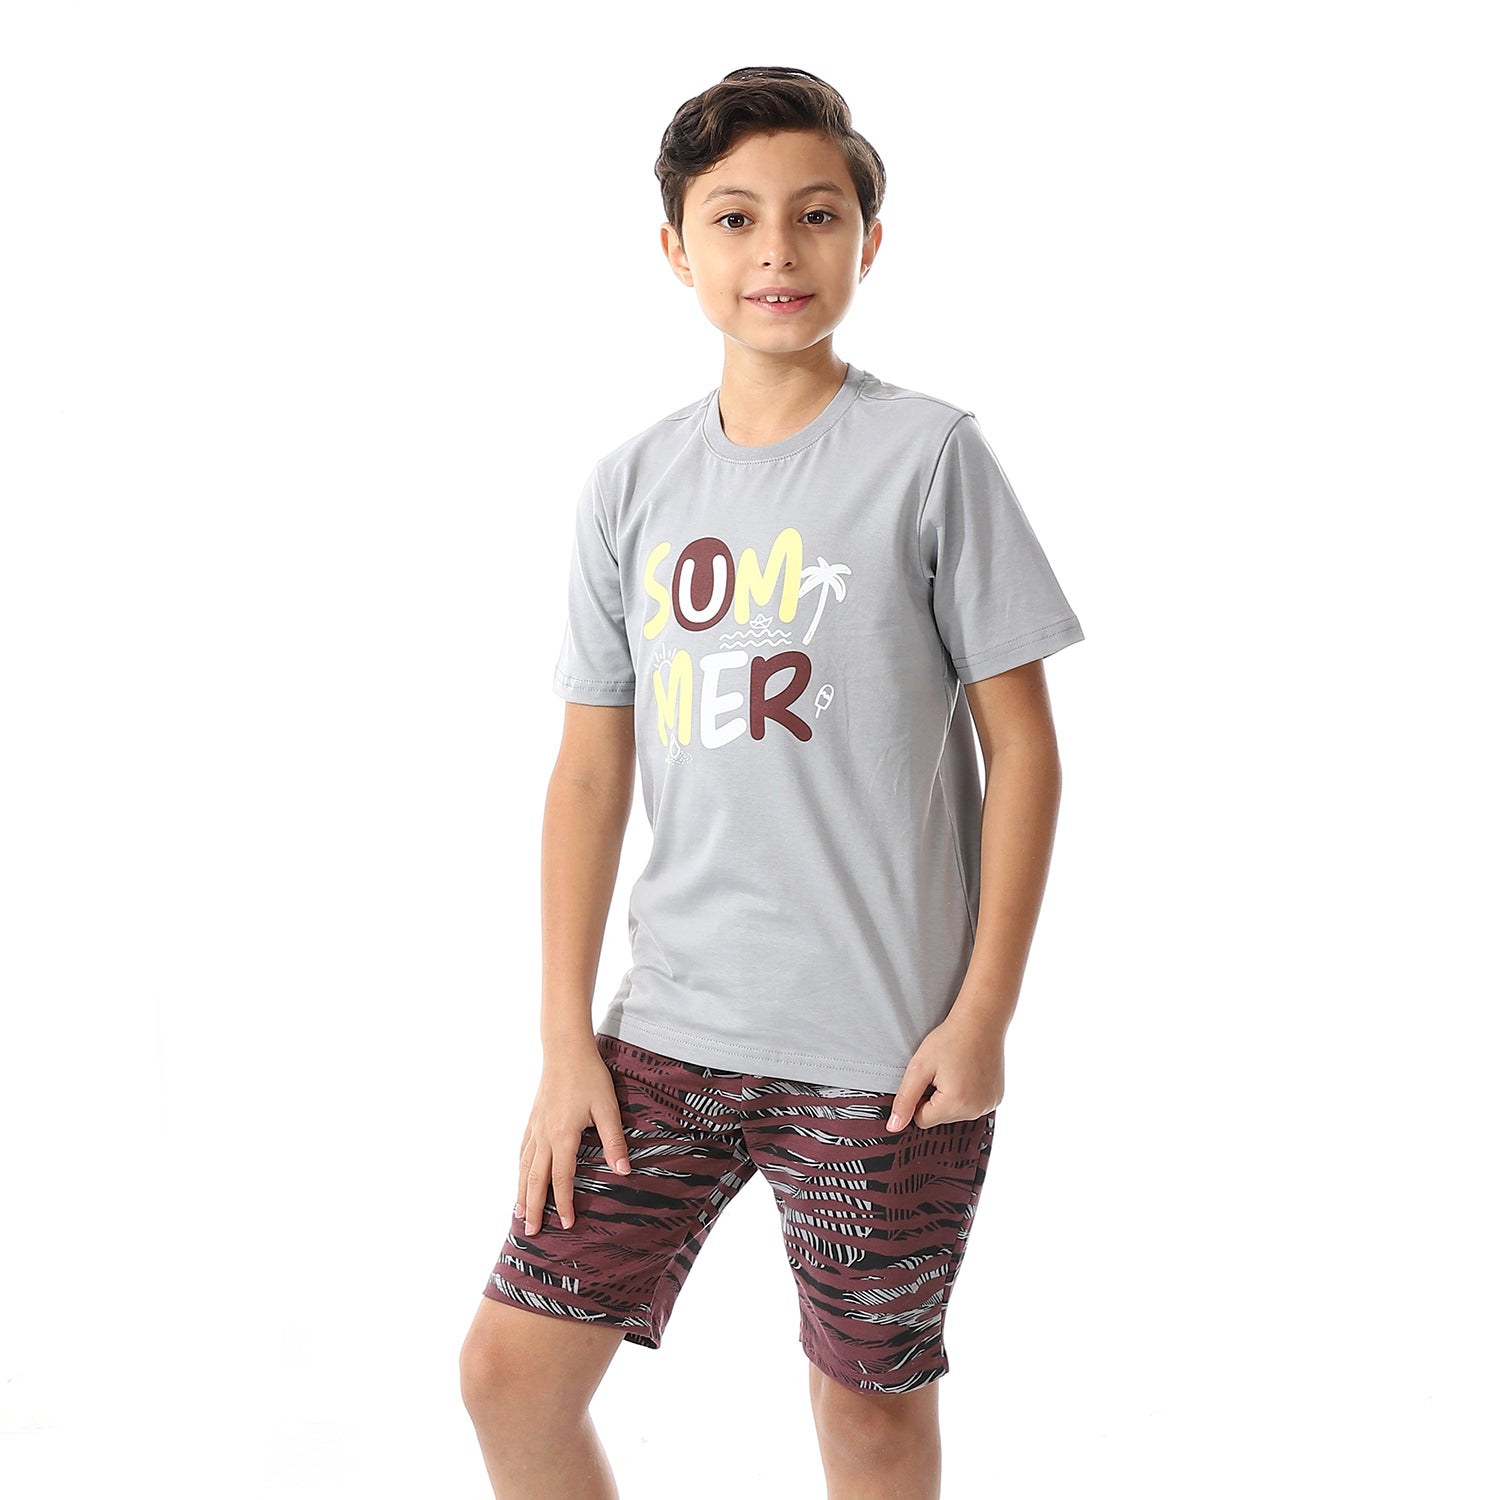 Boys Printed Colorful Summer & Shorts Pajama Set - Grey & Burgundy